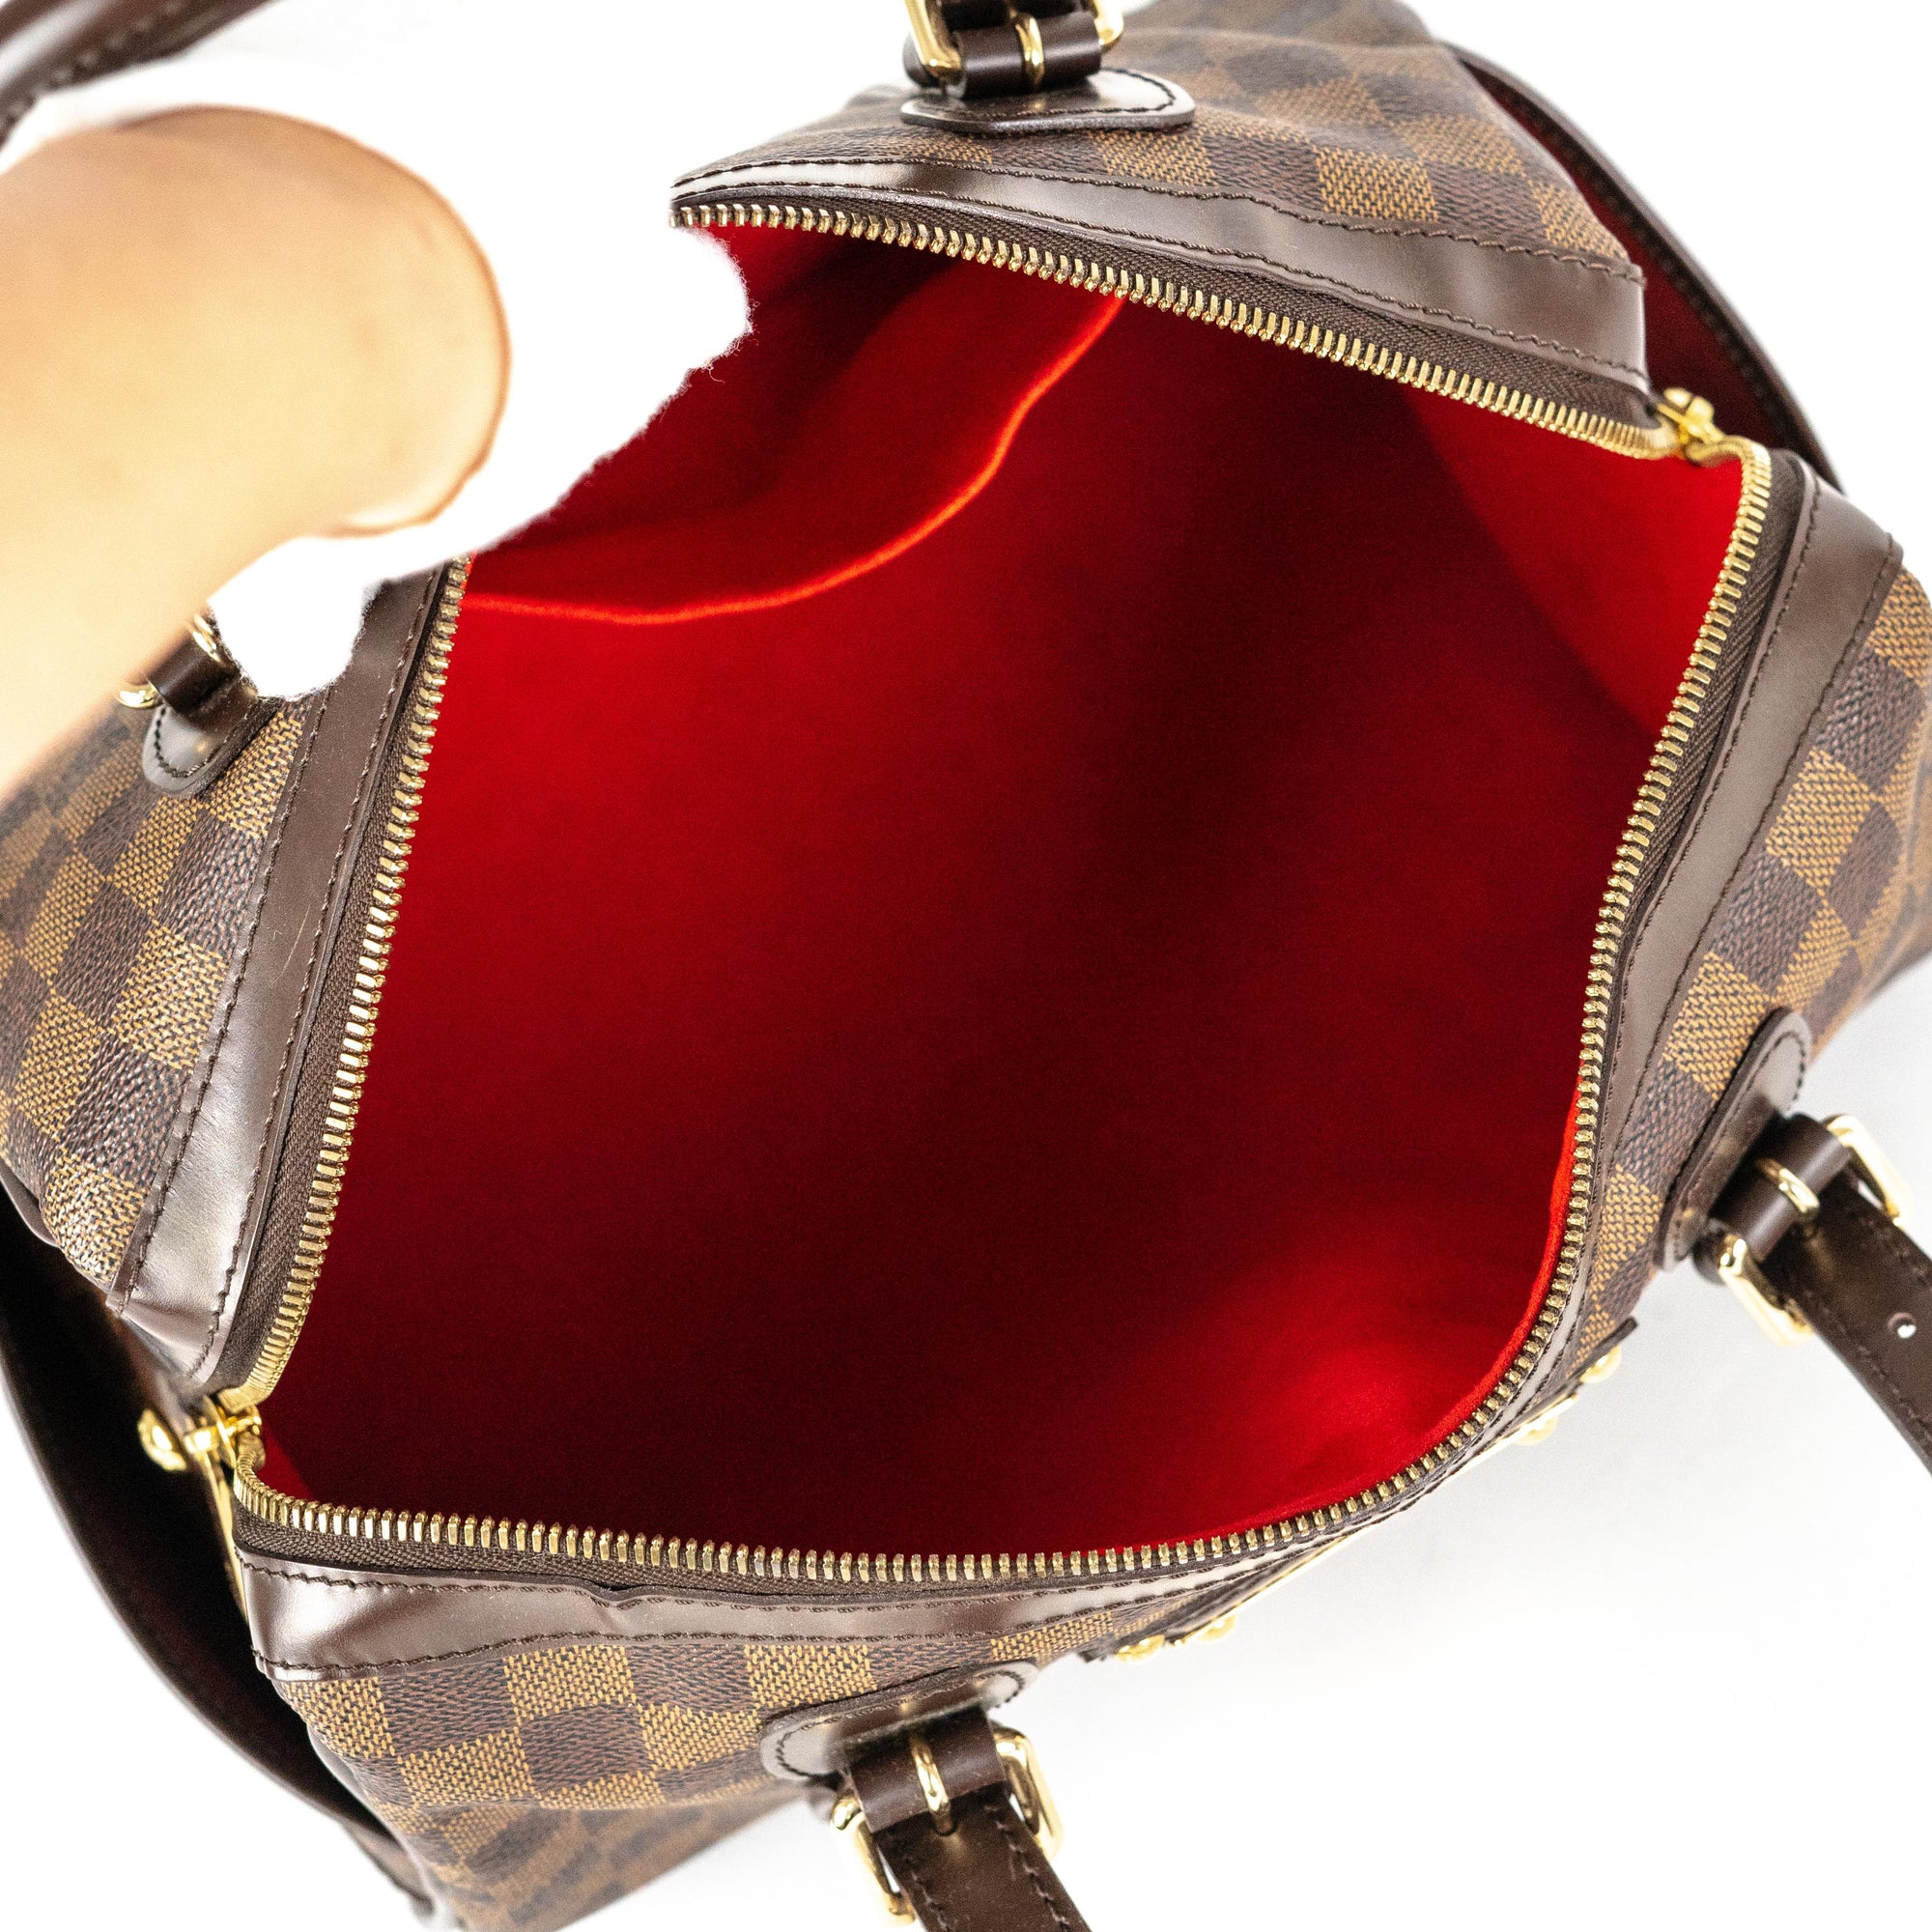 Louis Vuitton Berkeley Handbag 366746